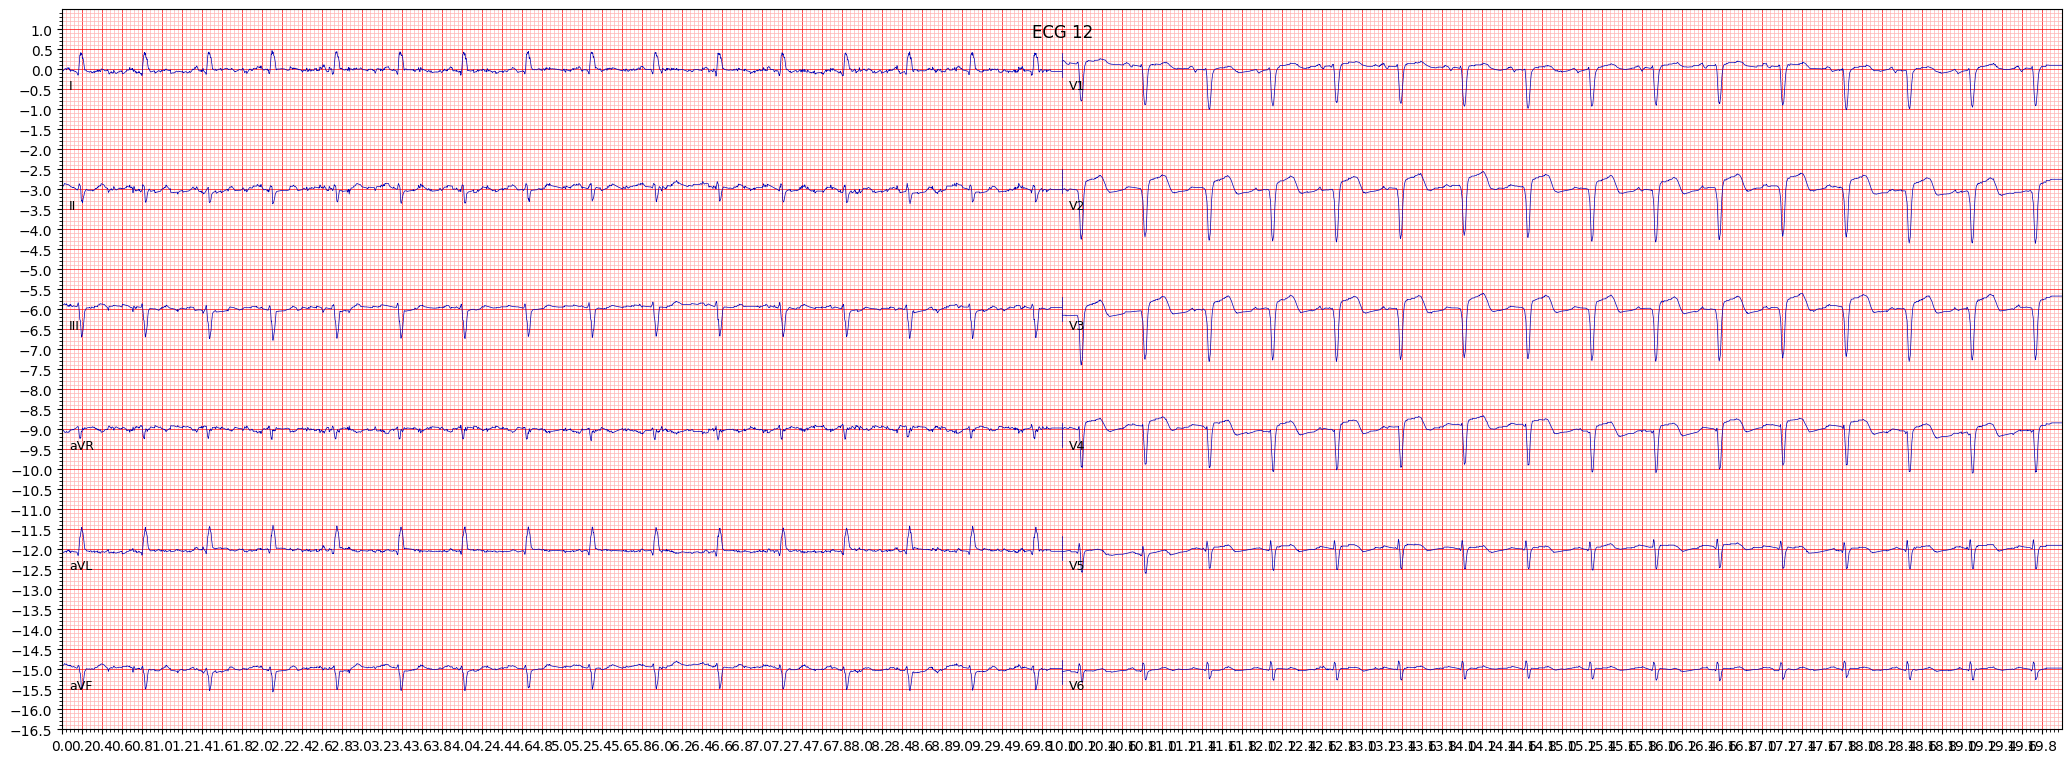 anteroseptal myocardial infarction (ASMI) example 177